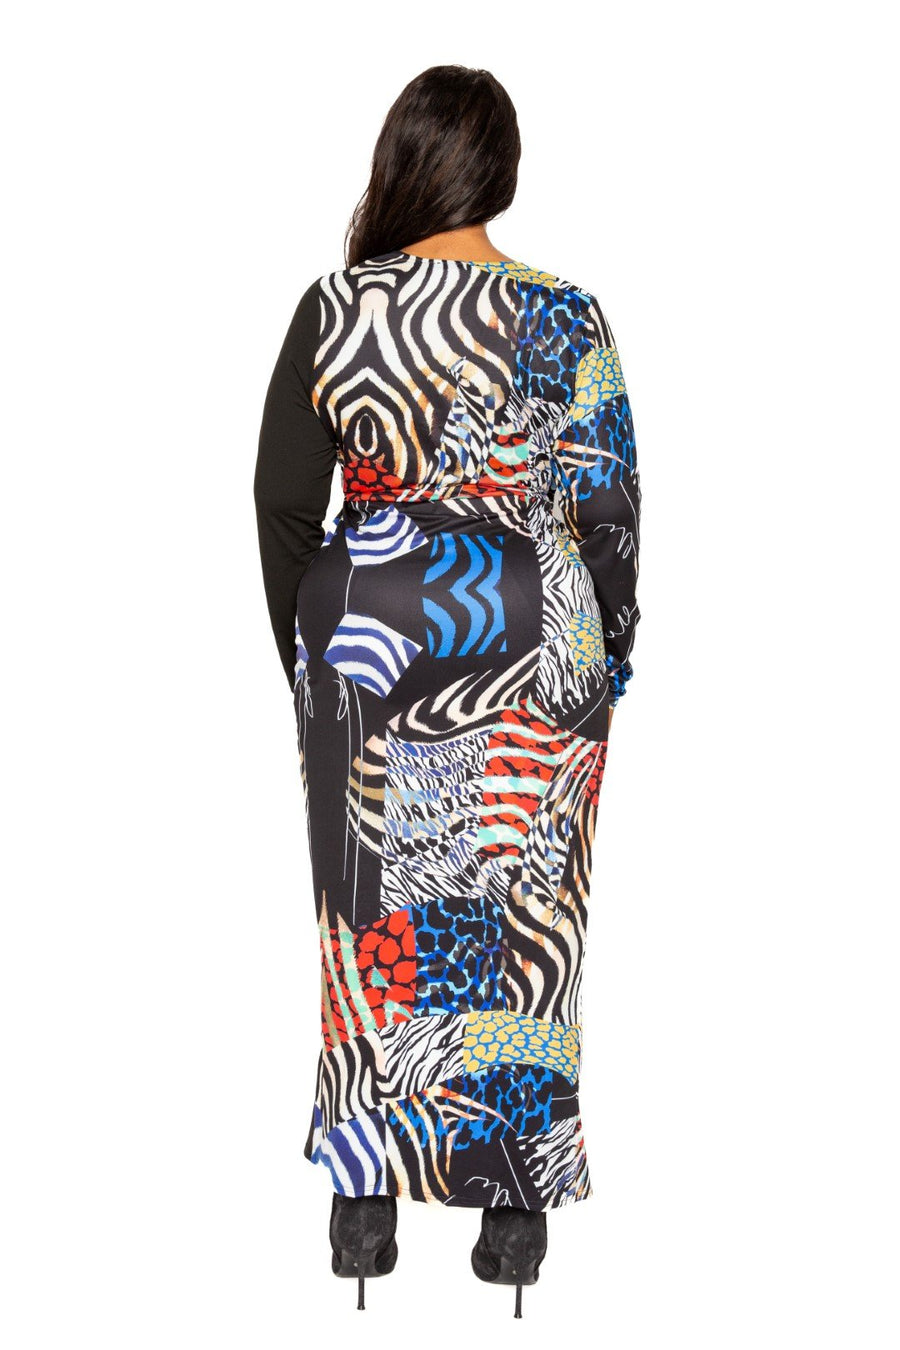 Animal Print Splice Dress With High-low Hem - Passion 4 Fashion USA